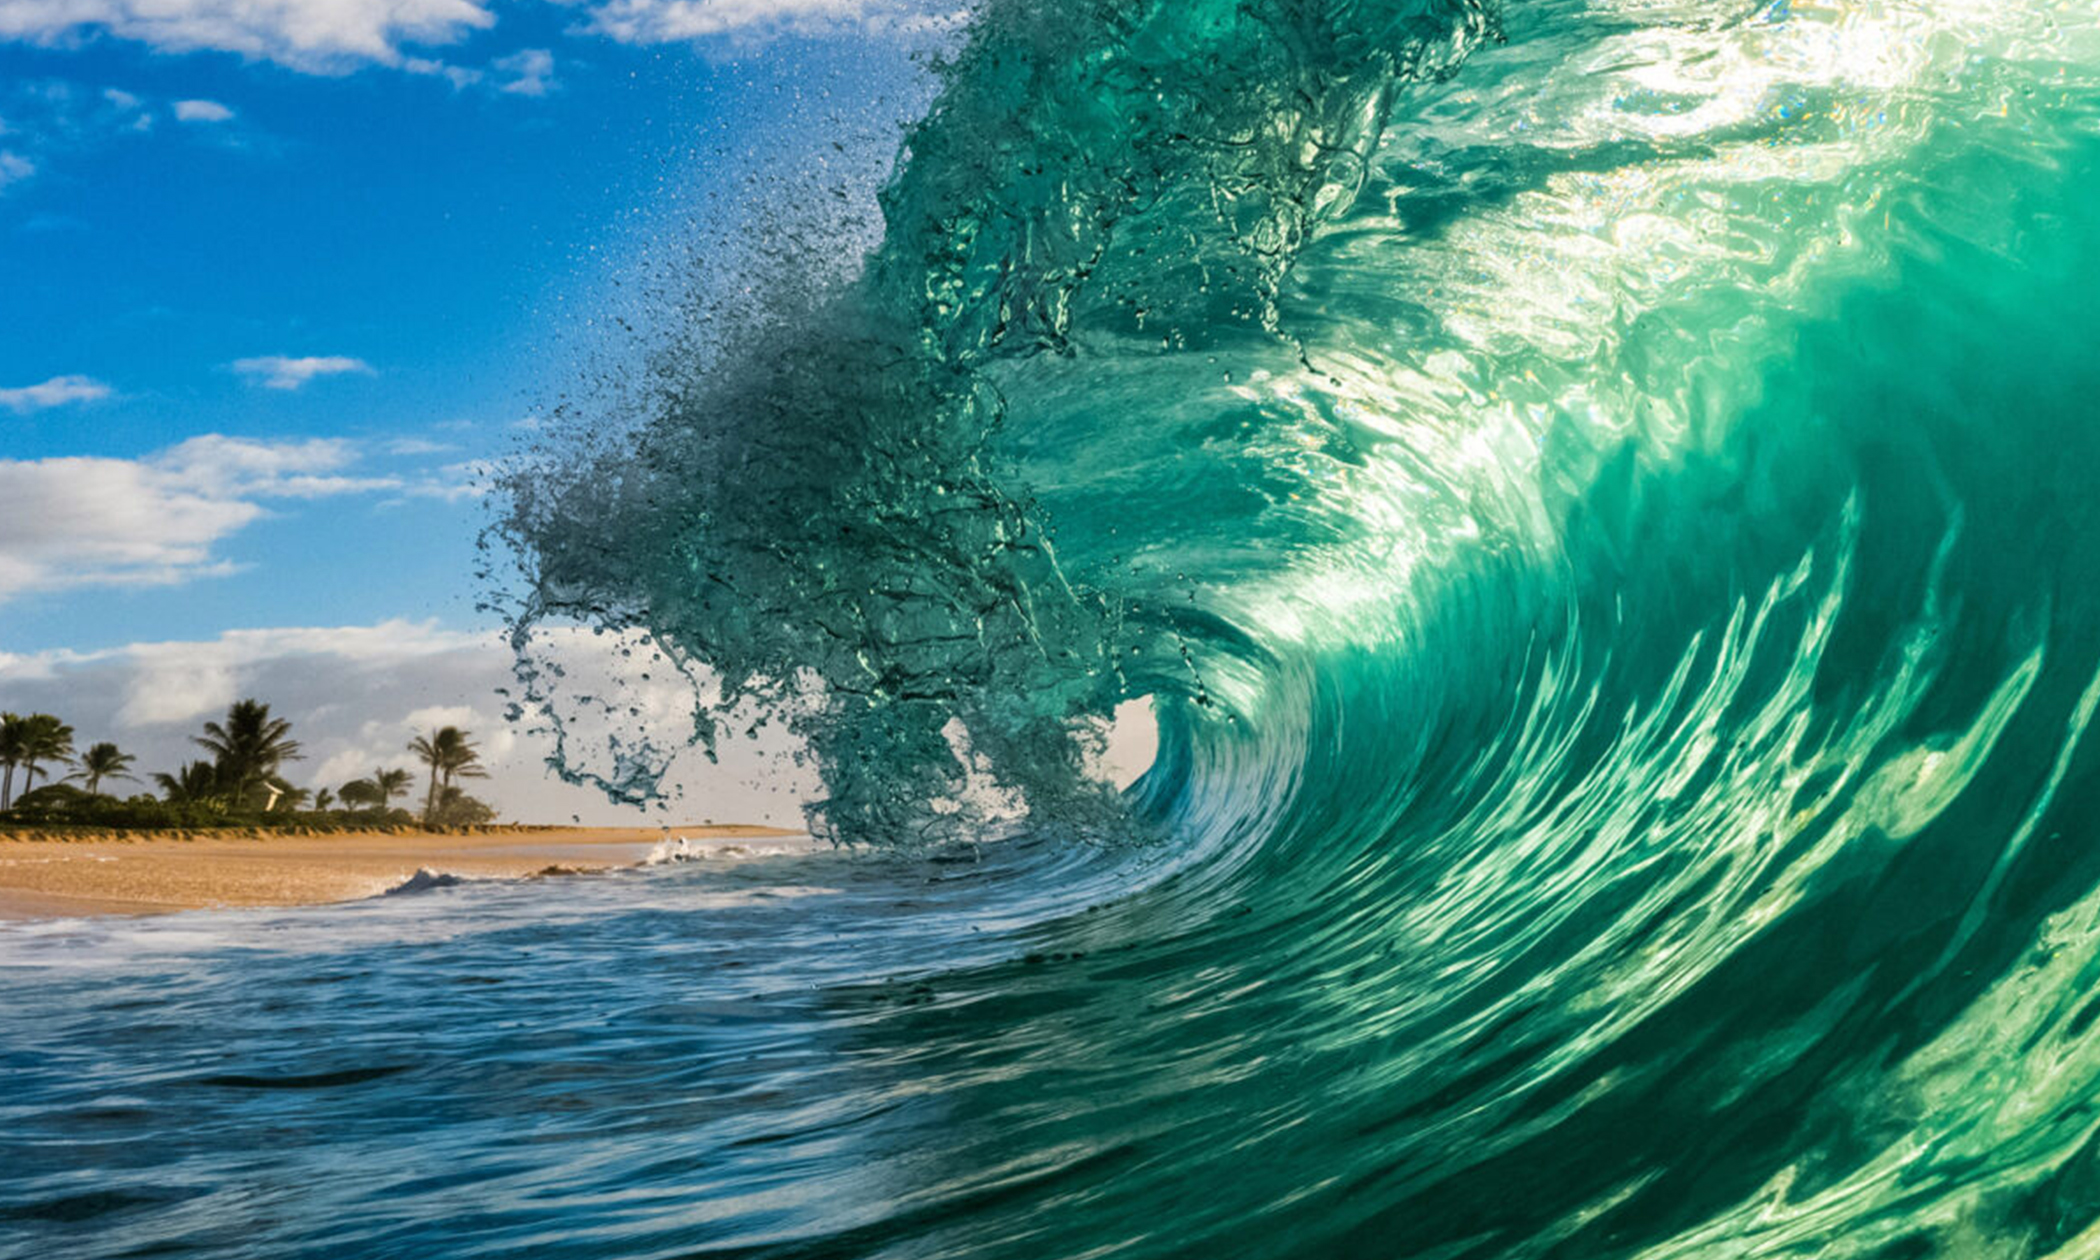 Wave Photographer Captures Glasslike Insides of Surf Waves That Look Unreal Thru His Lens